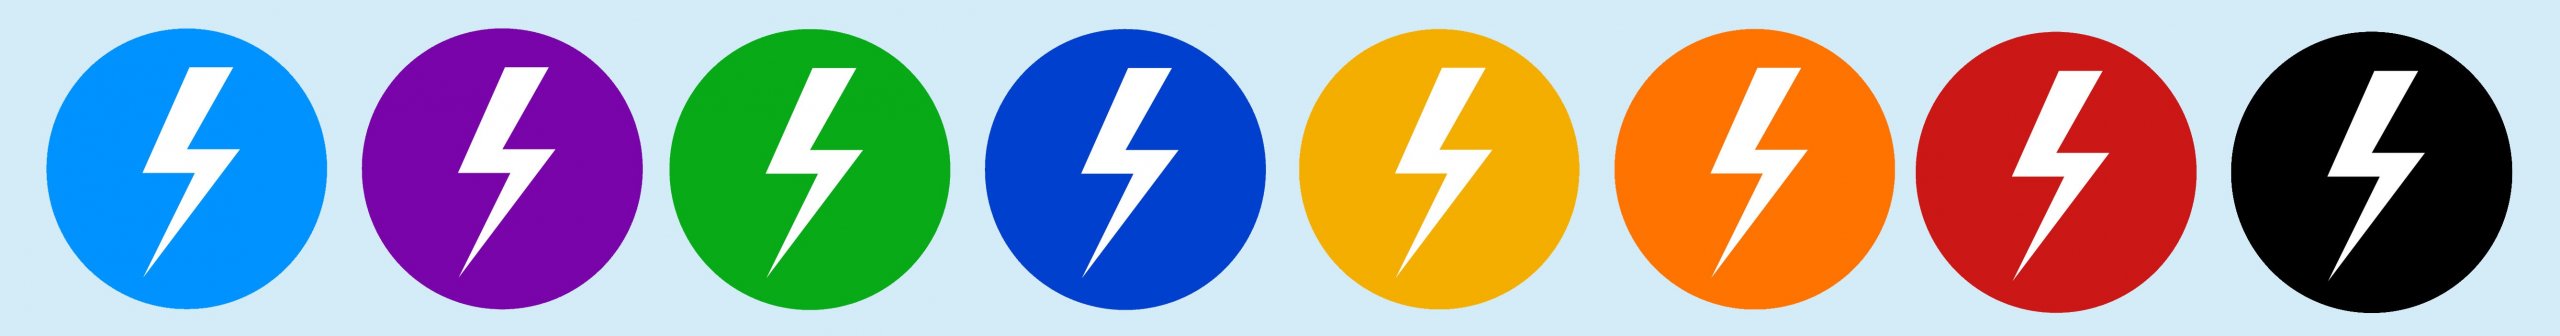 icones-electricite-banque-images-couleurs